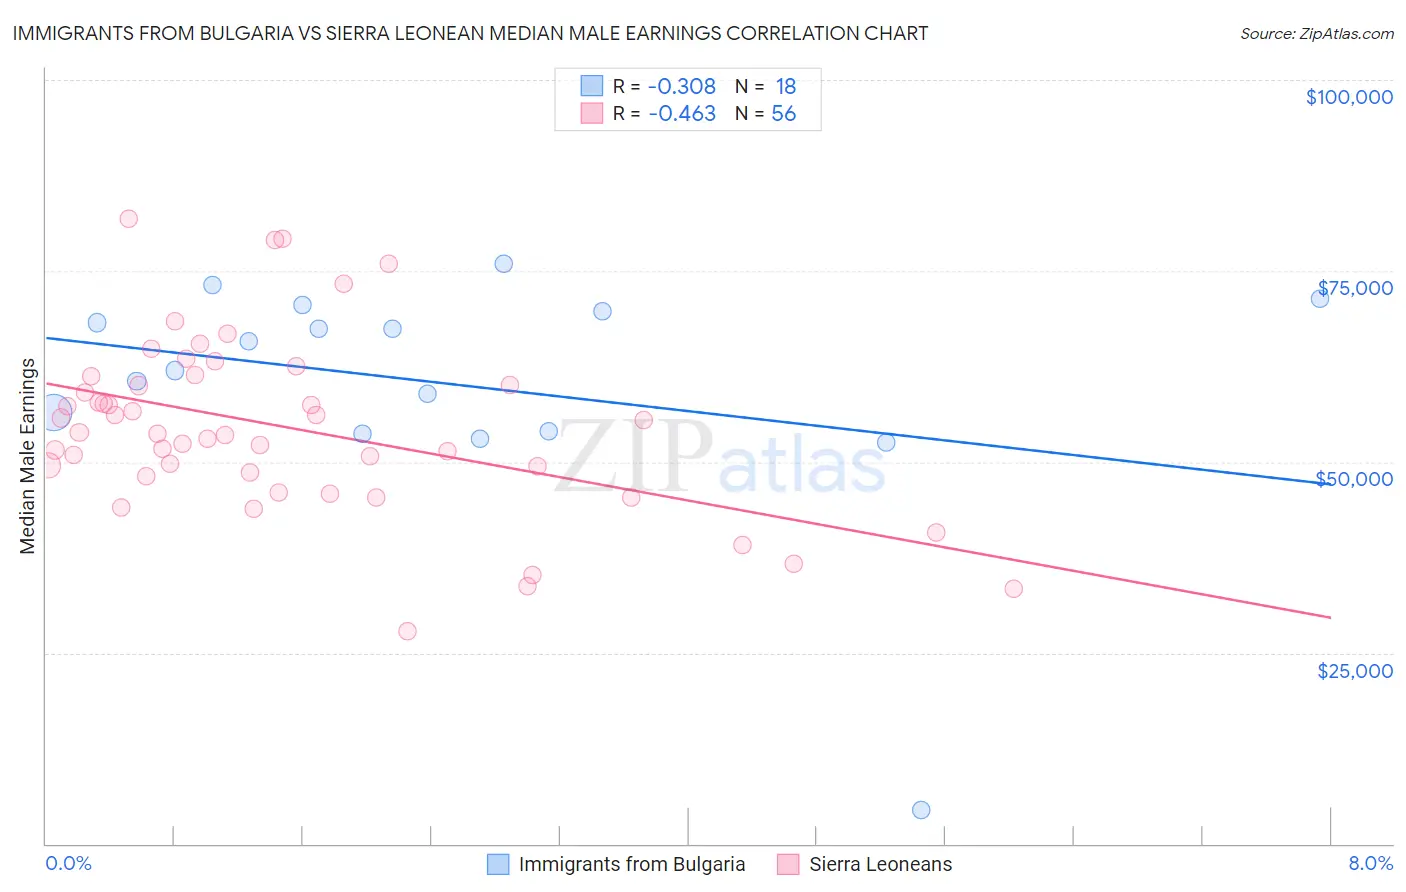 Immigrants from Bulgaria vs Sierra Leonean Median Male Earnings